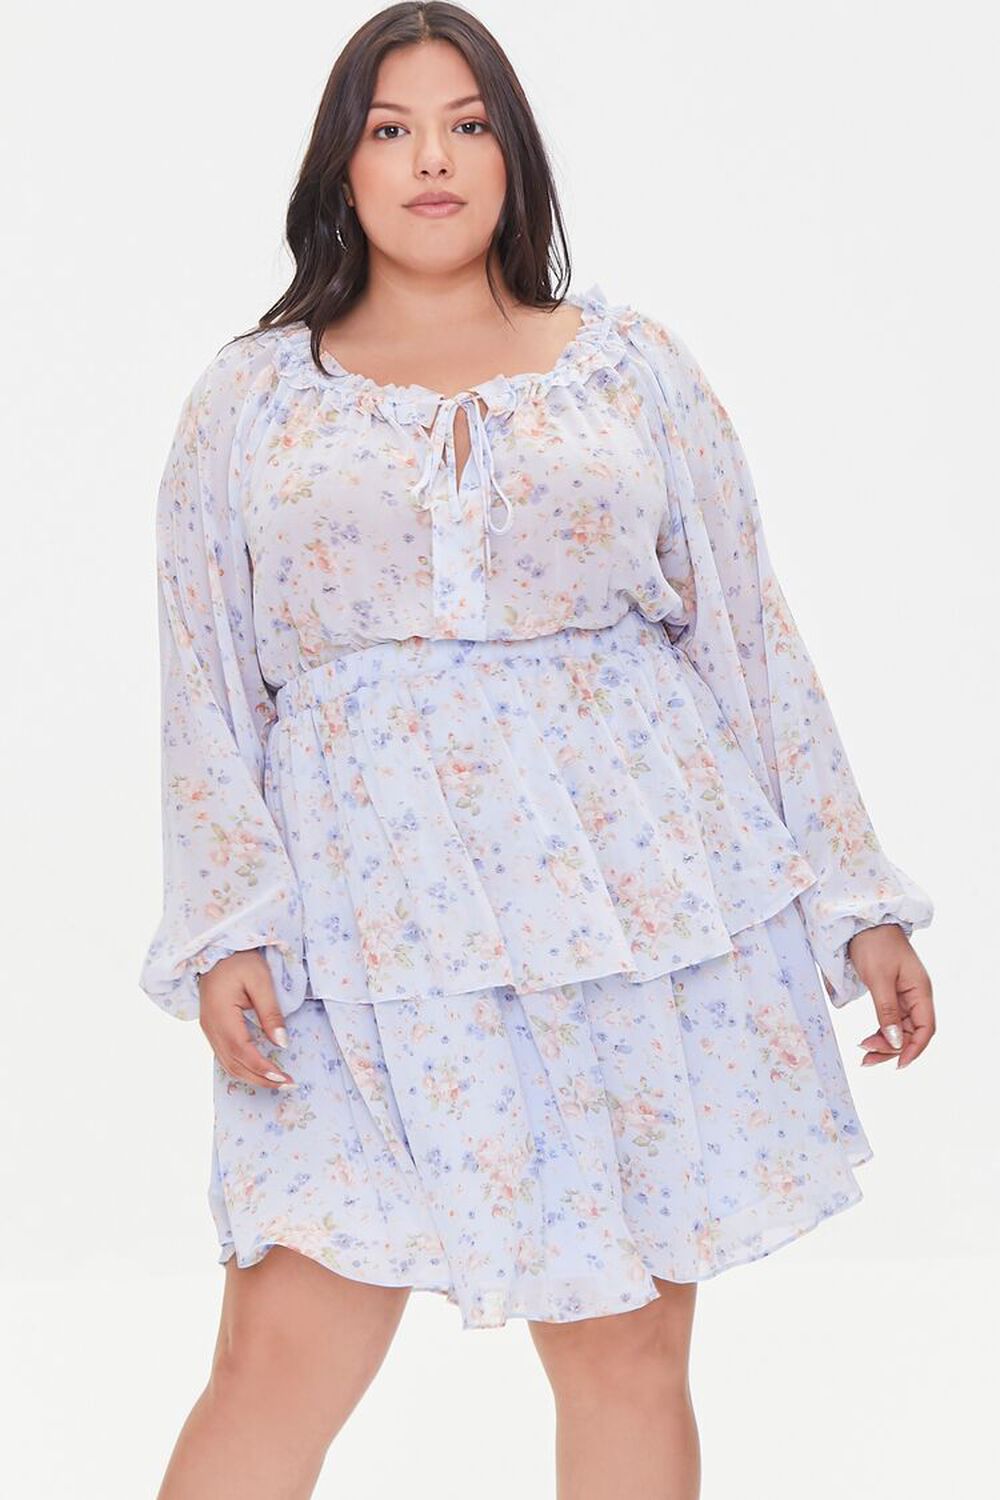 BLUE/MULTI Plus Size Floral Mini Dress, image 1